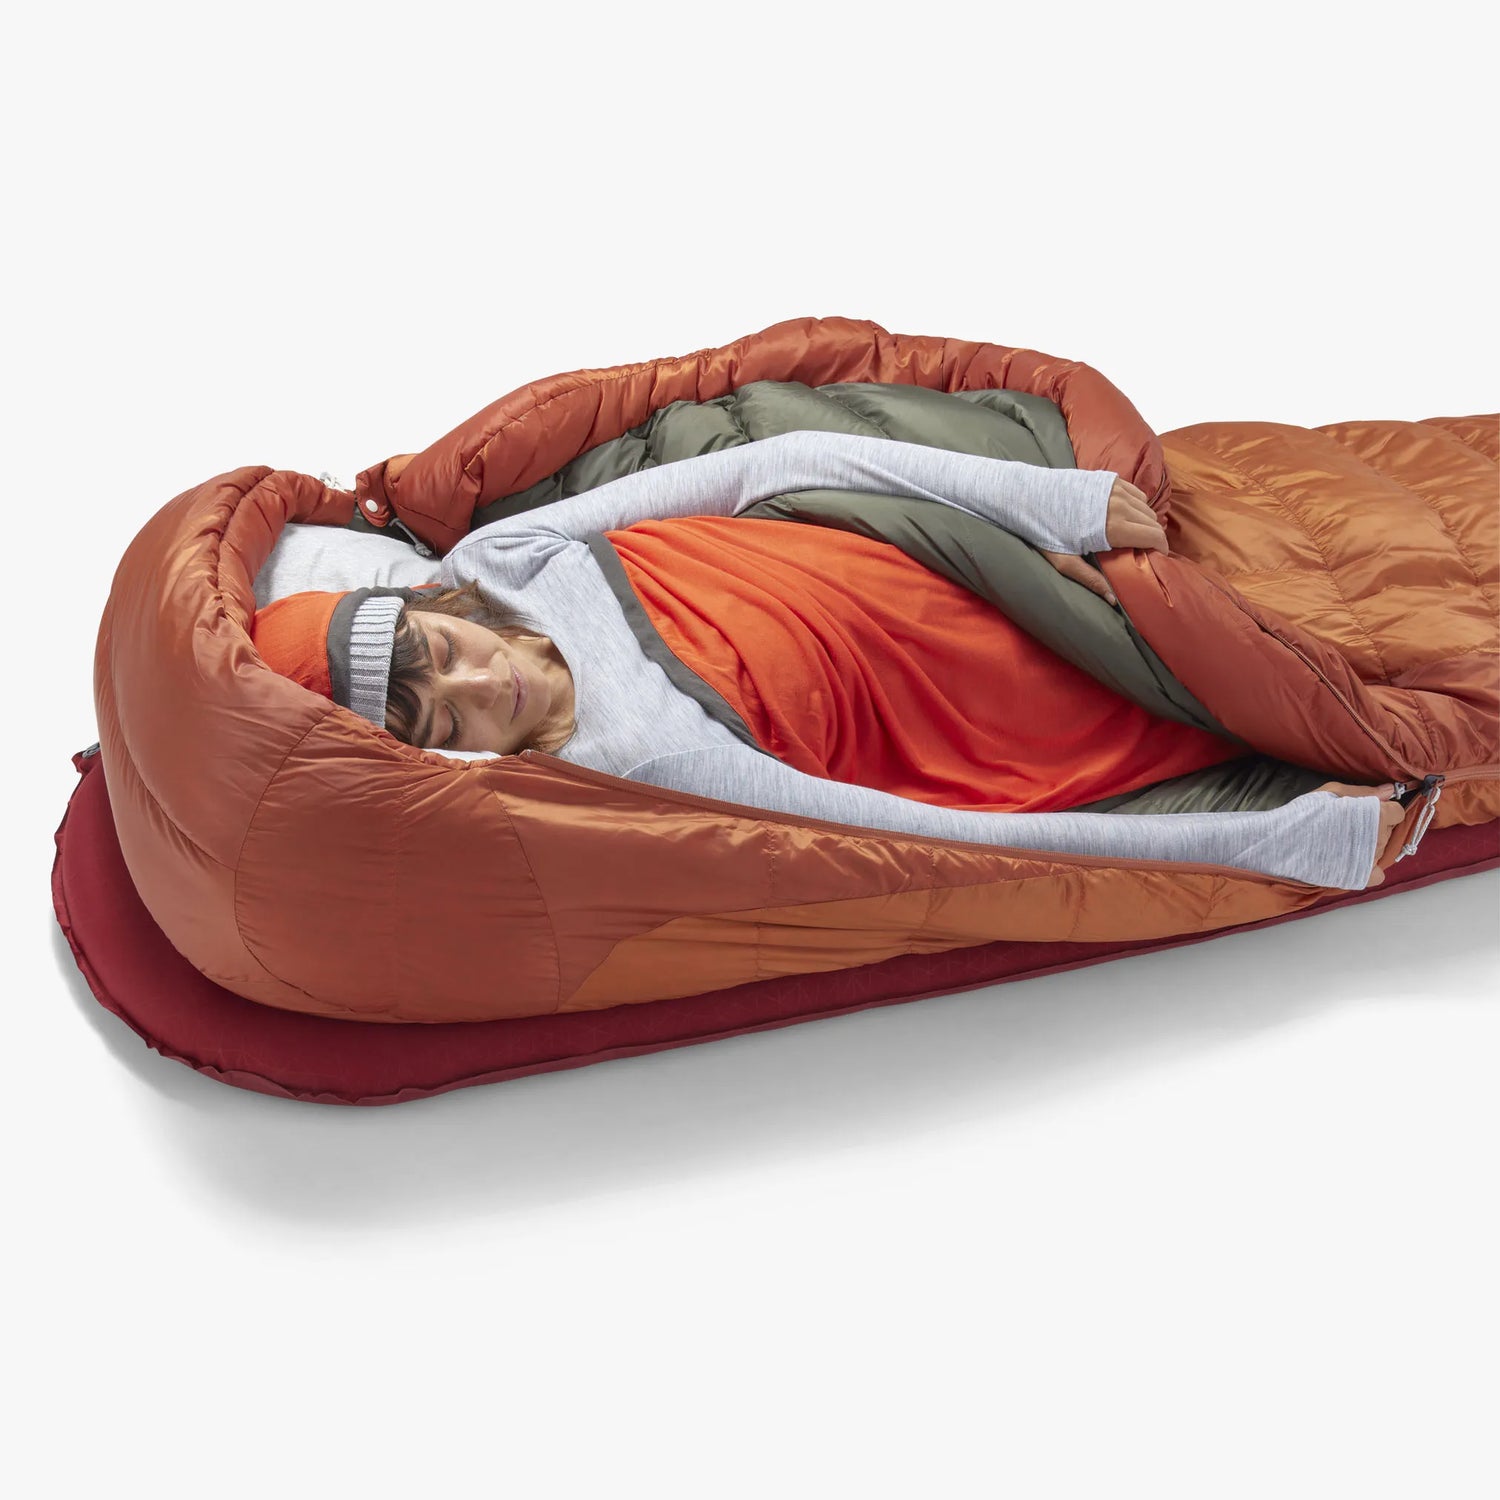 Review: Sierra Designs Mobile Mummy 15F/-9C Sleeping Bag - The Big